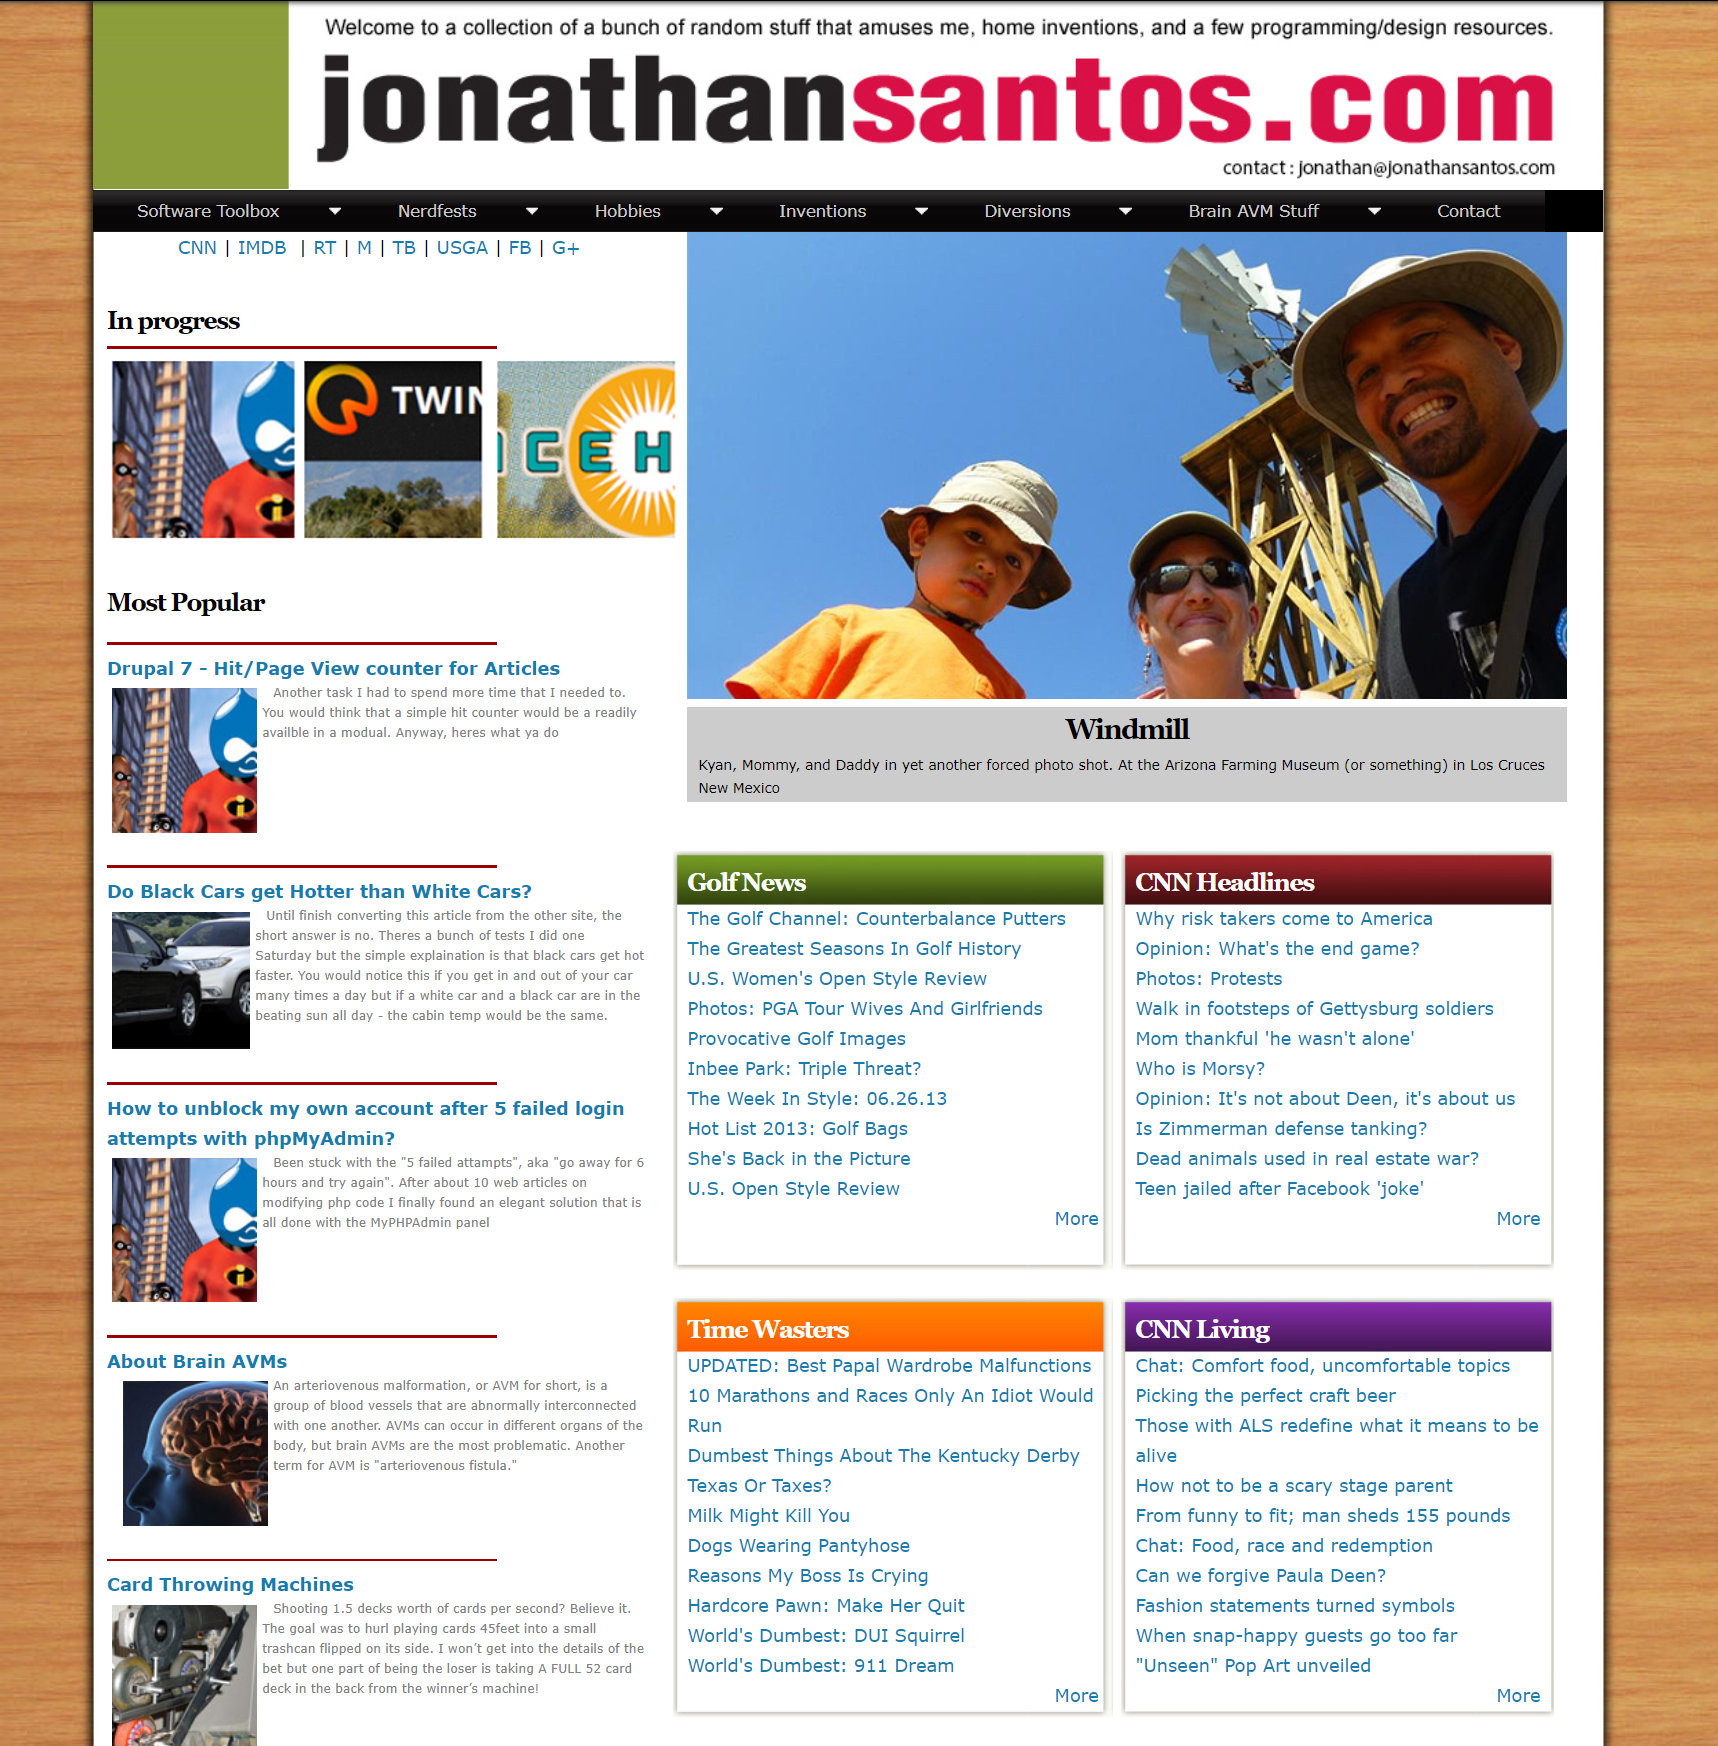 JonathanSantos.com design over the year